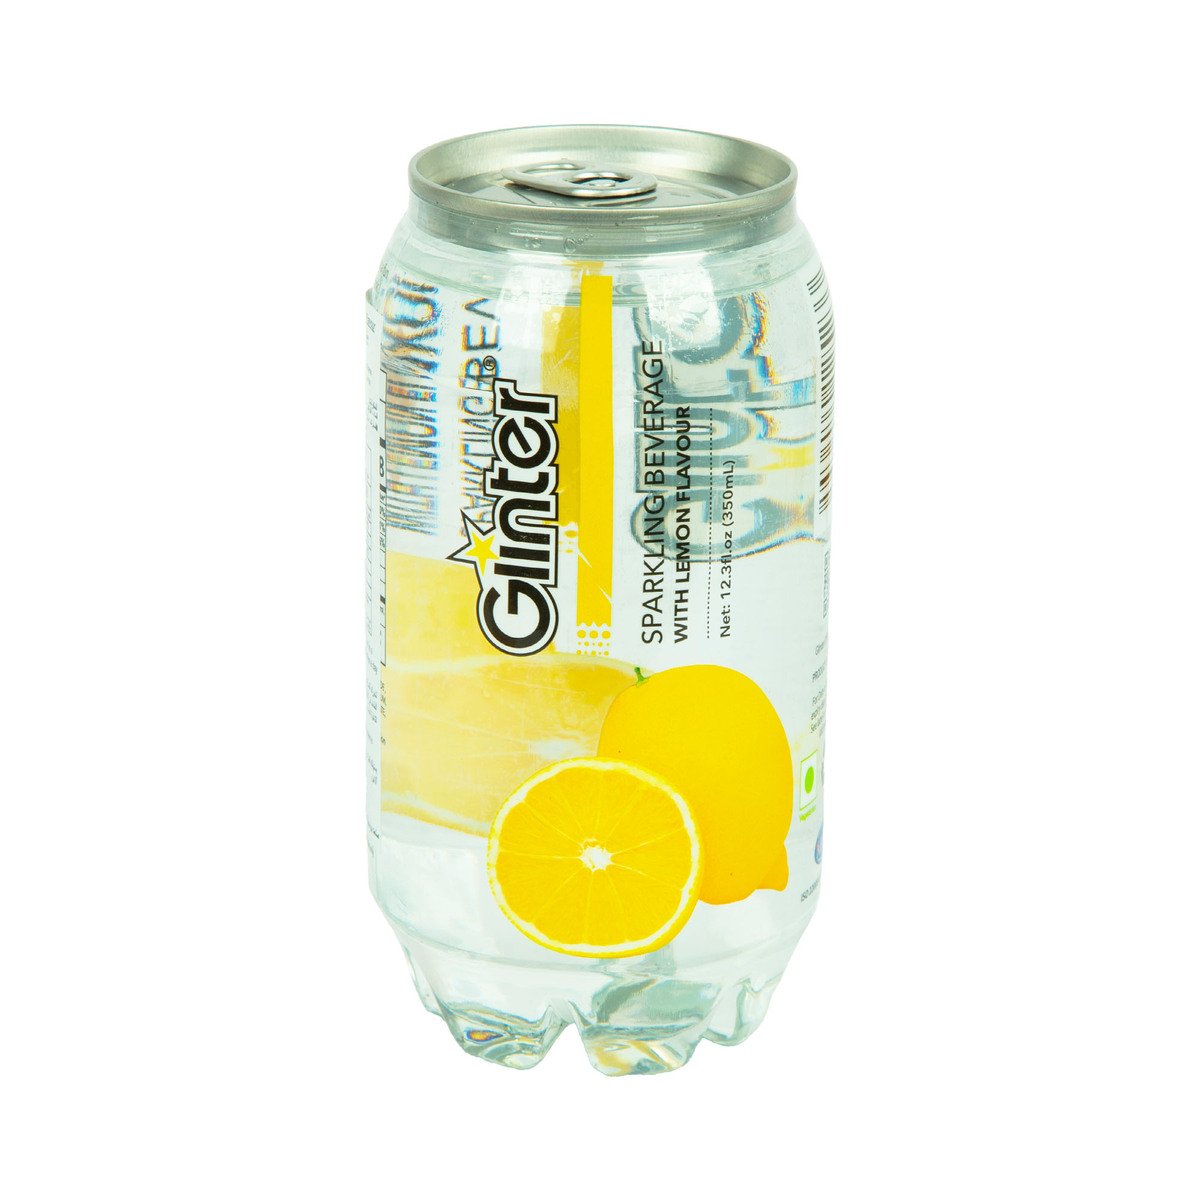 Glinter Sparkling Beverage with Lemon Flavour, 350 ml